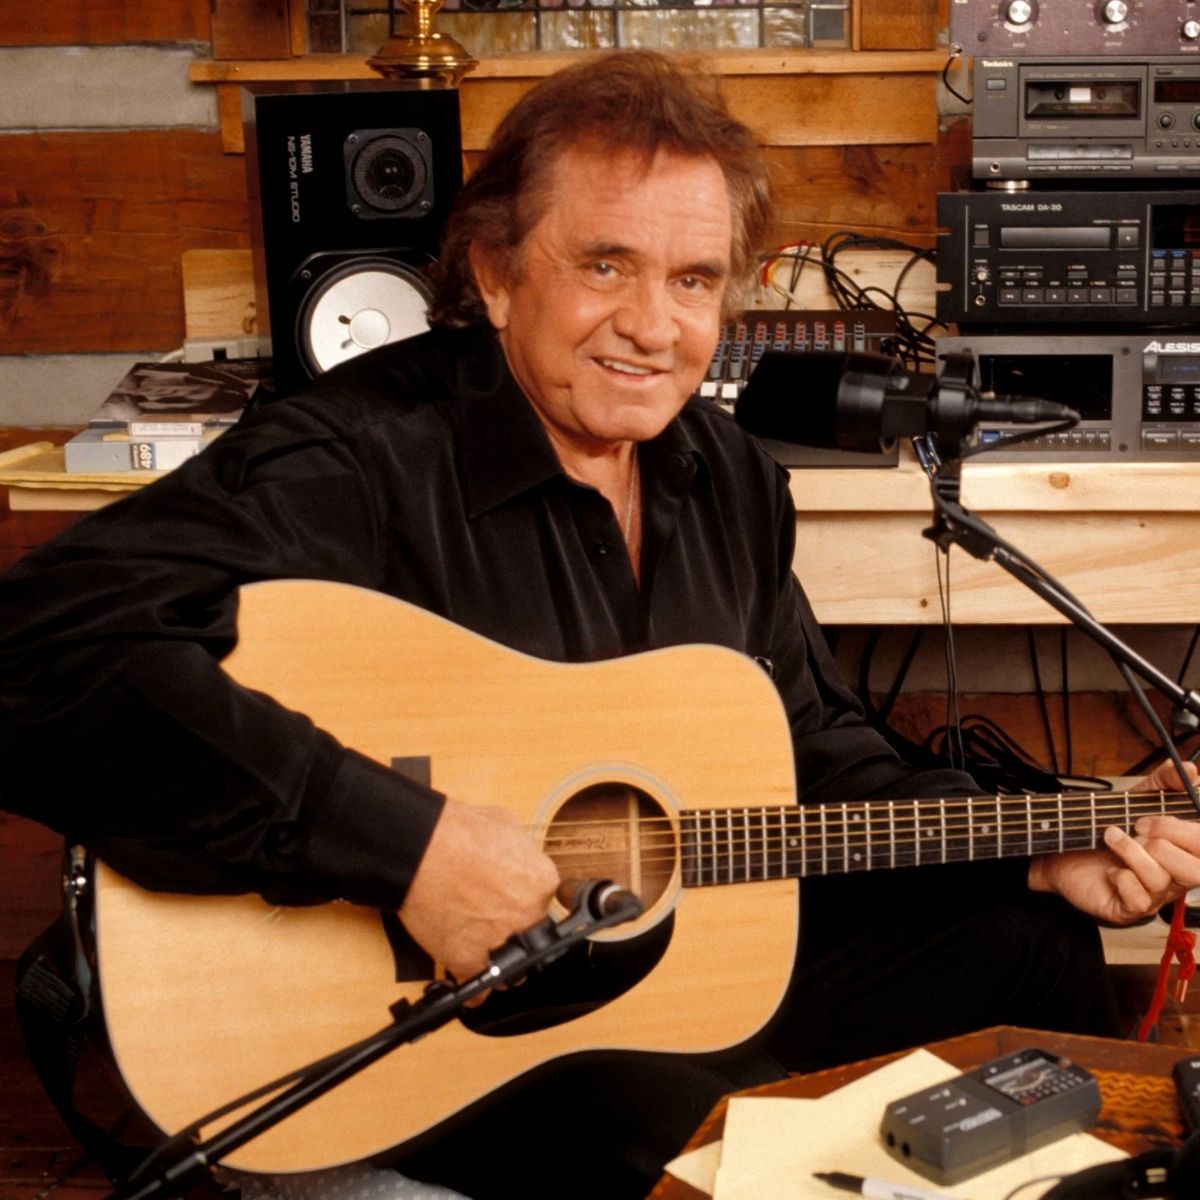 Johnny Cash at the recording studio